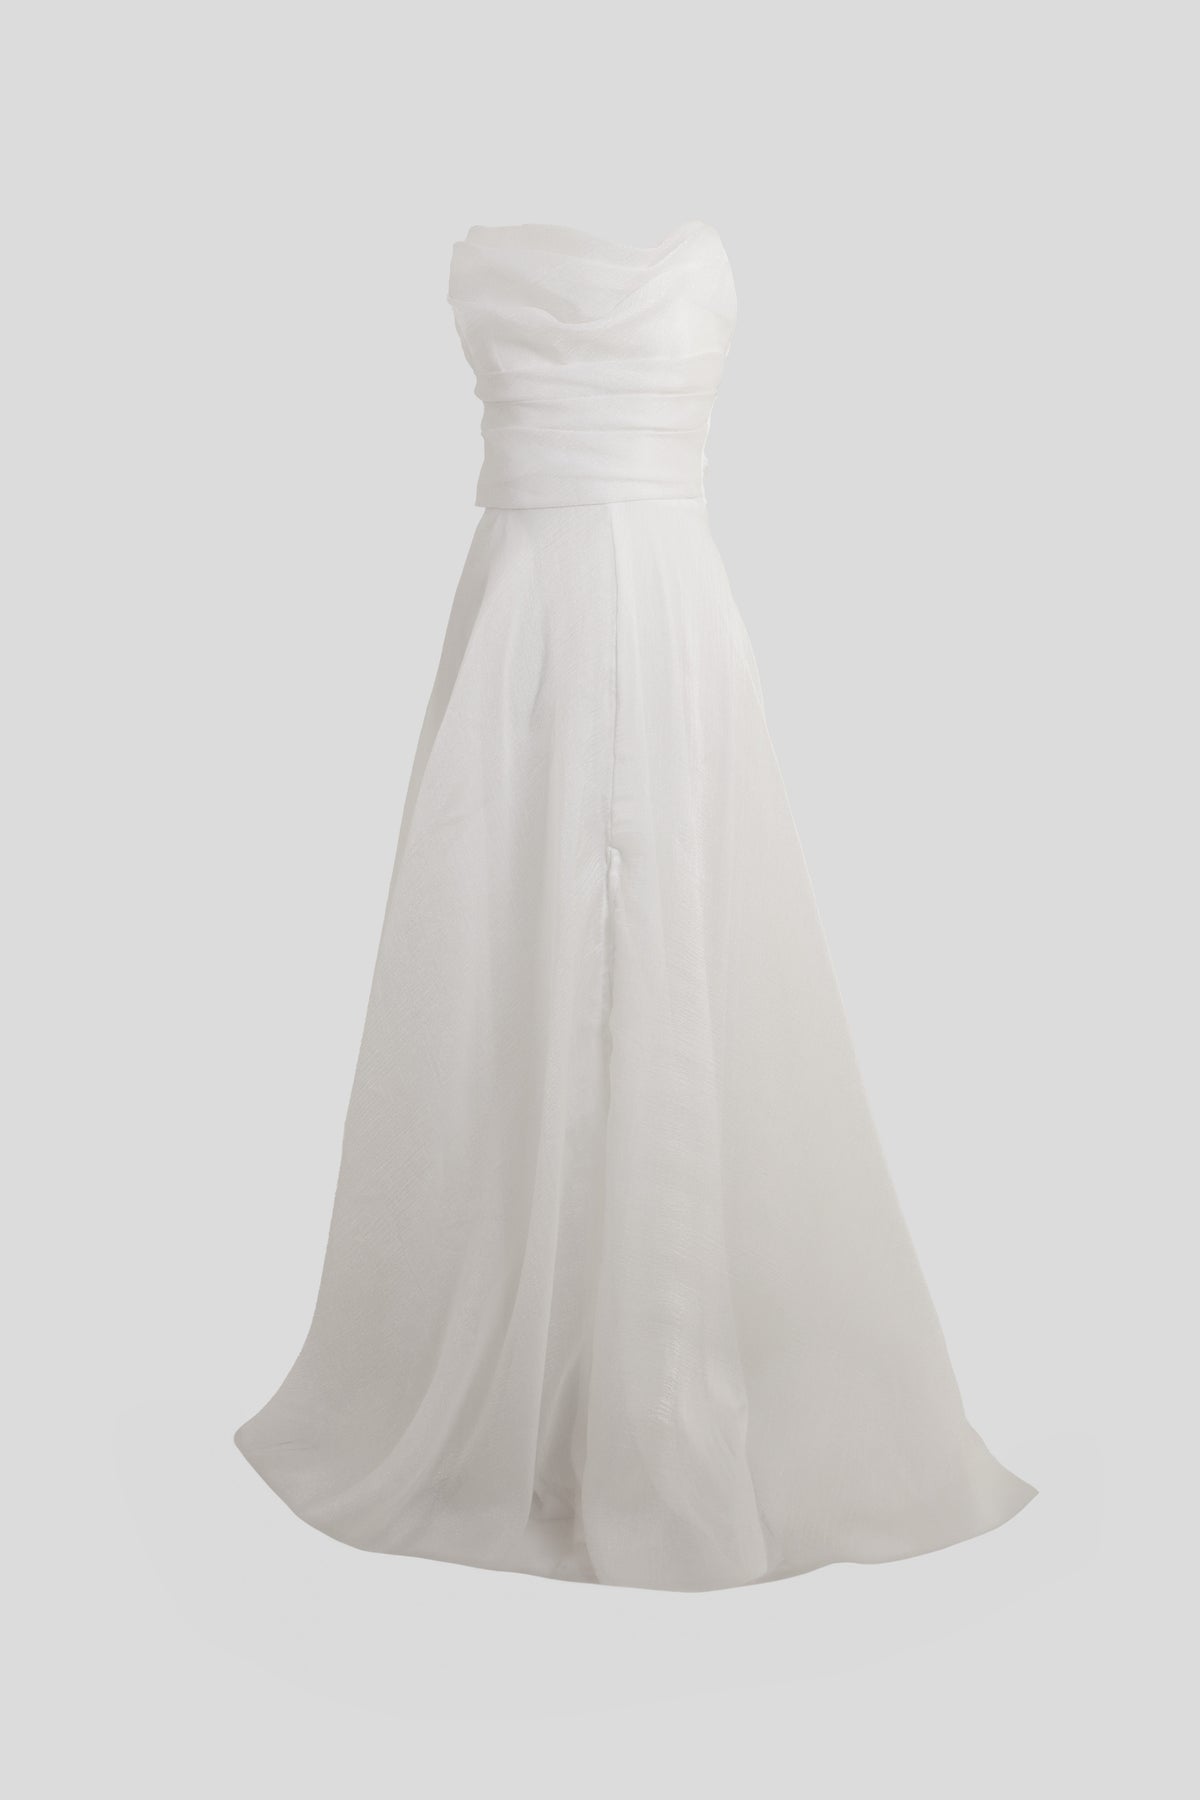 Long white top evening dress 